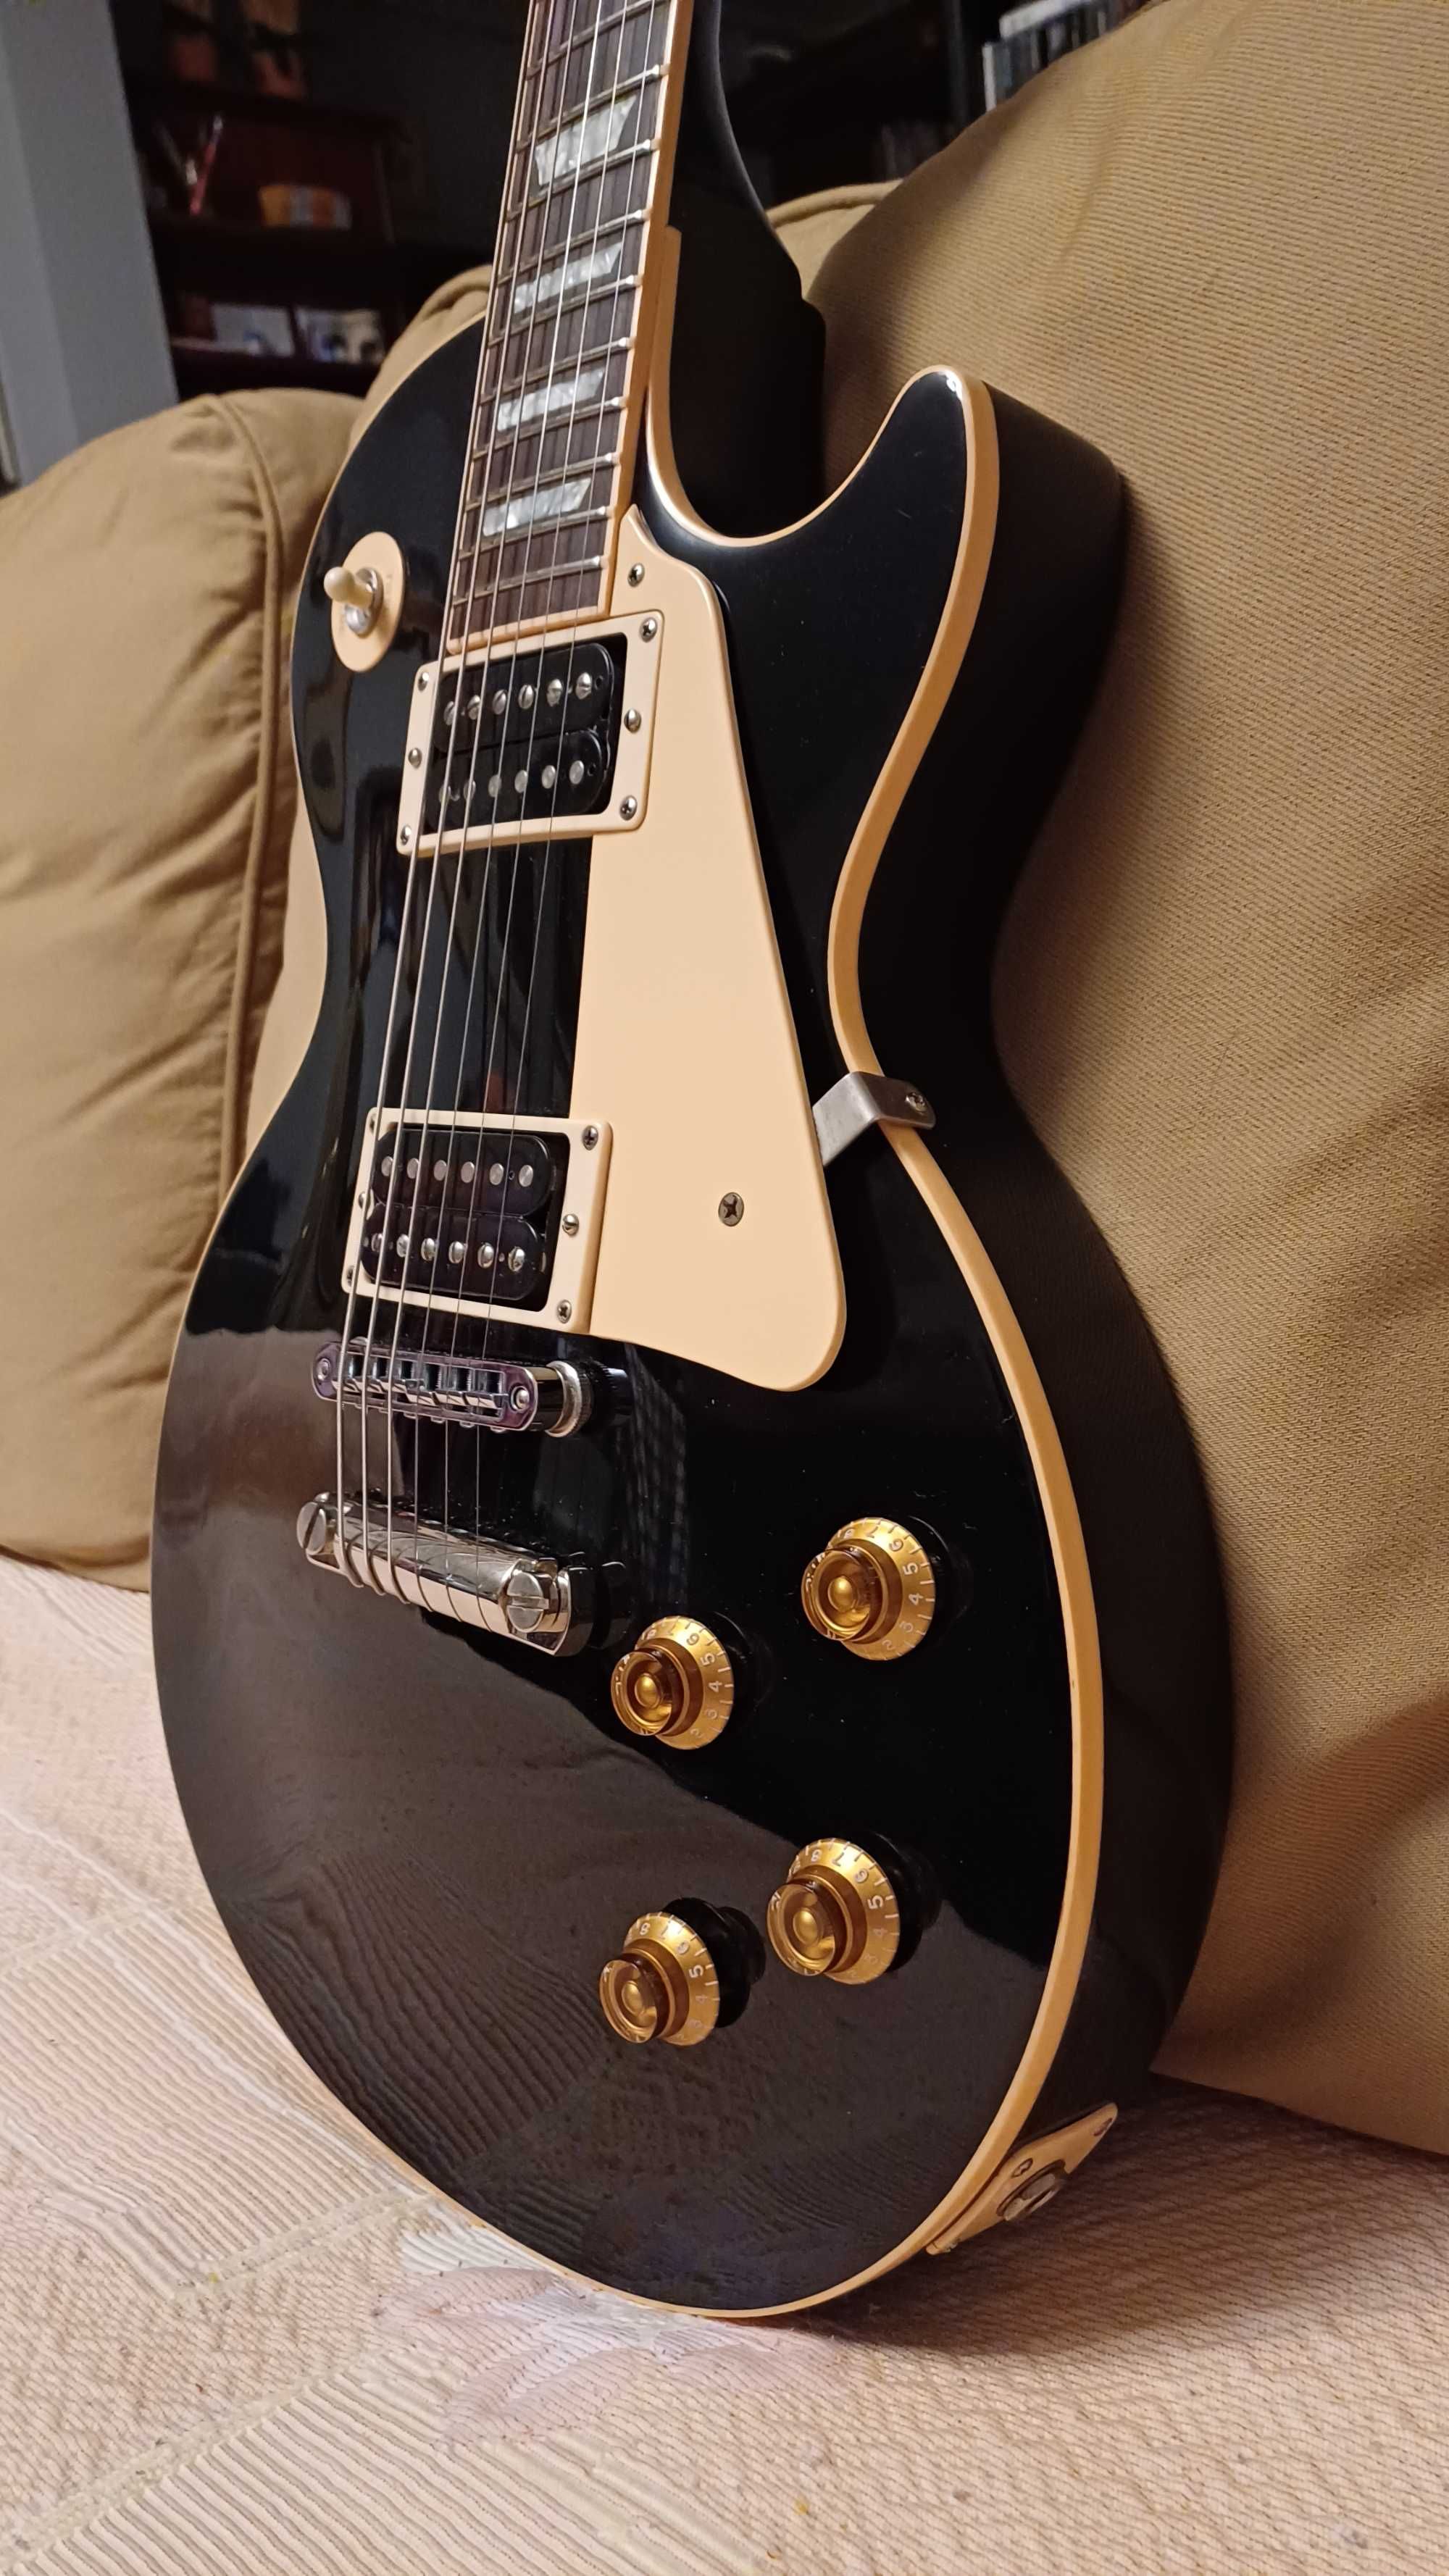 Gibson Les Paul Standard 2005